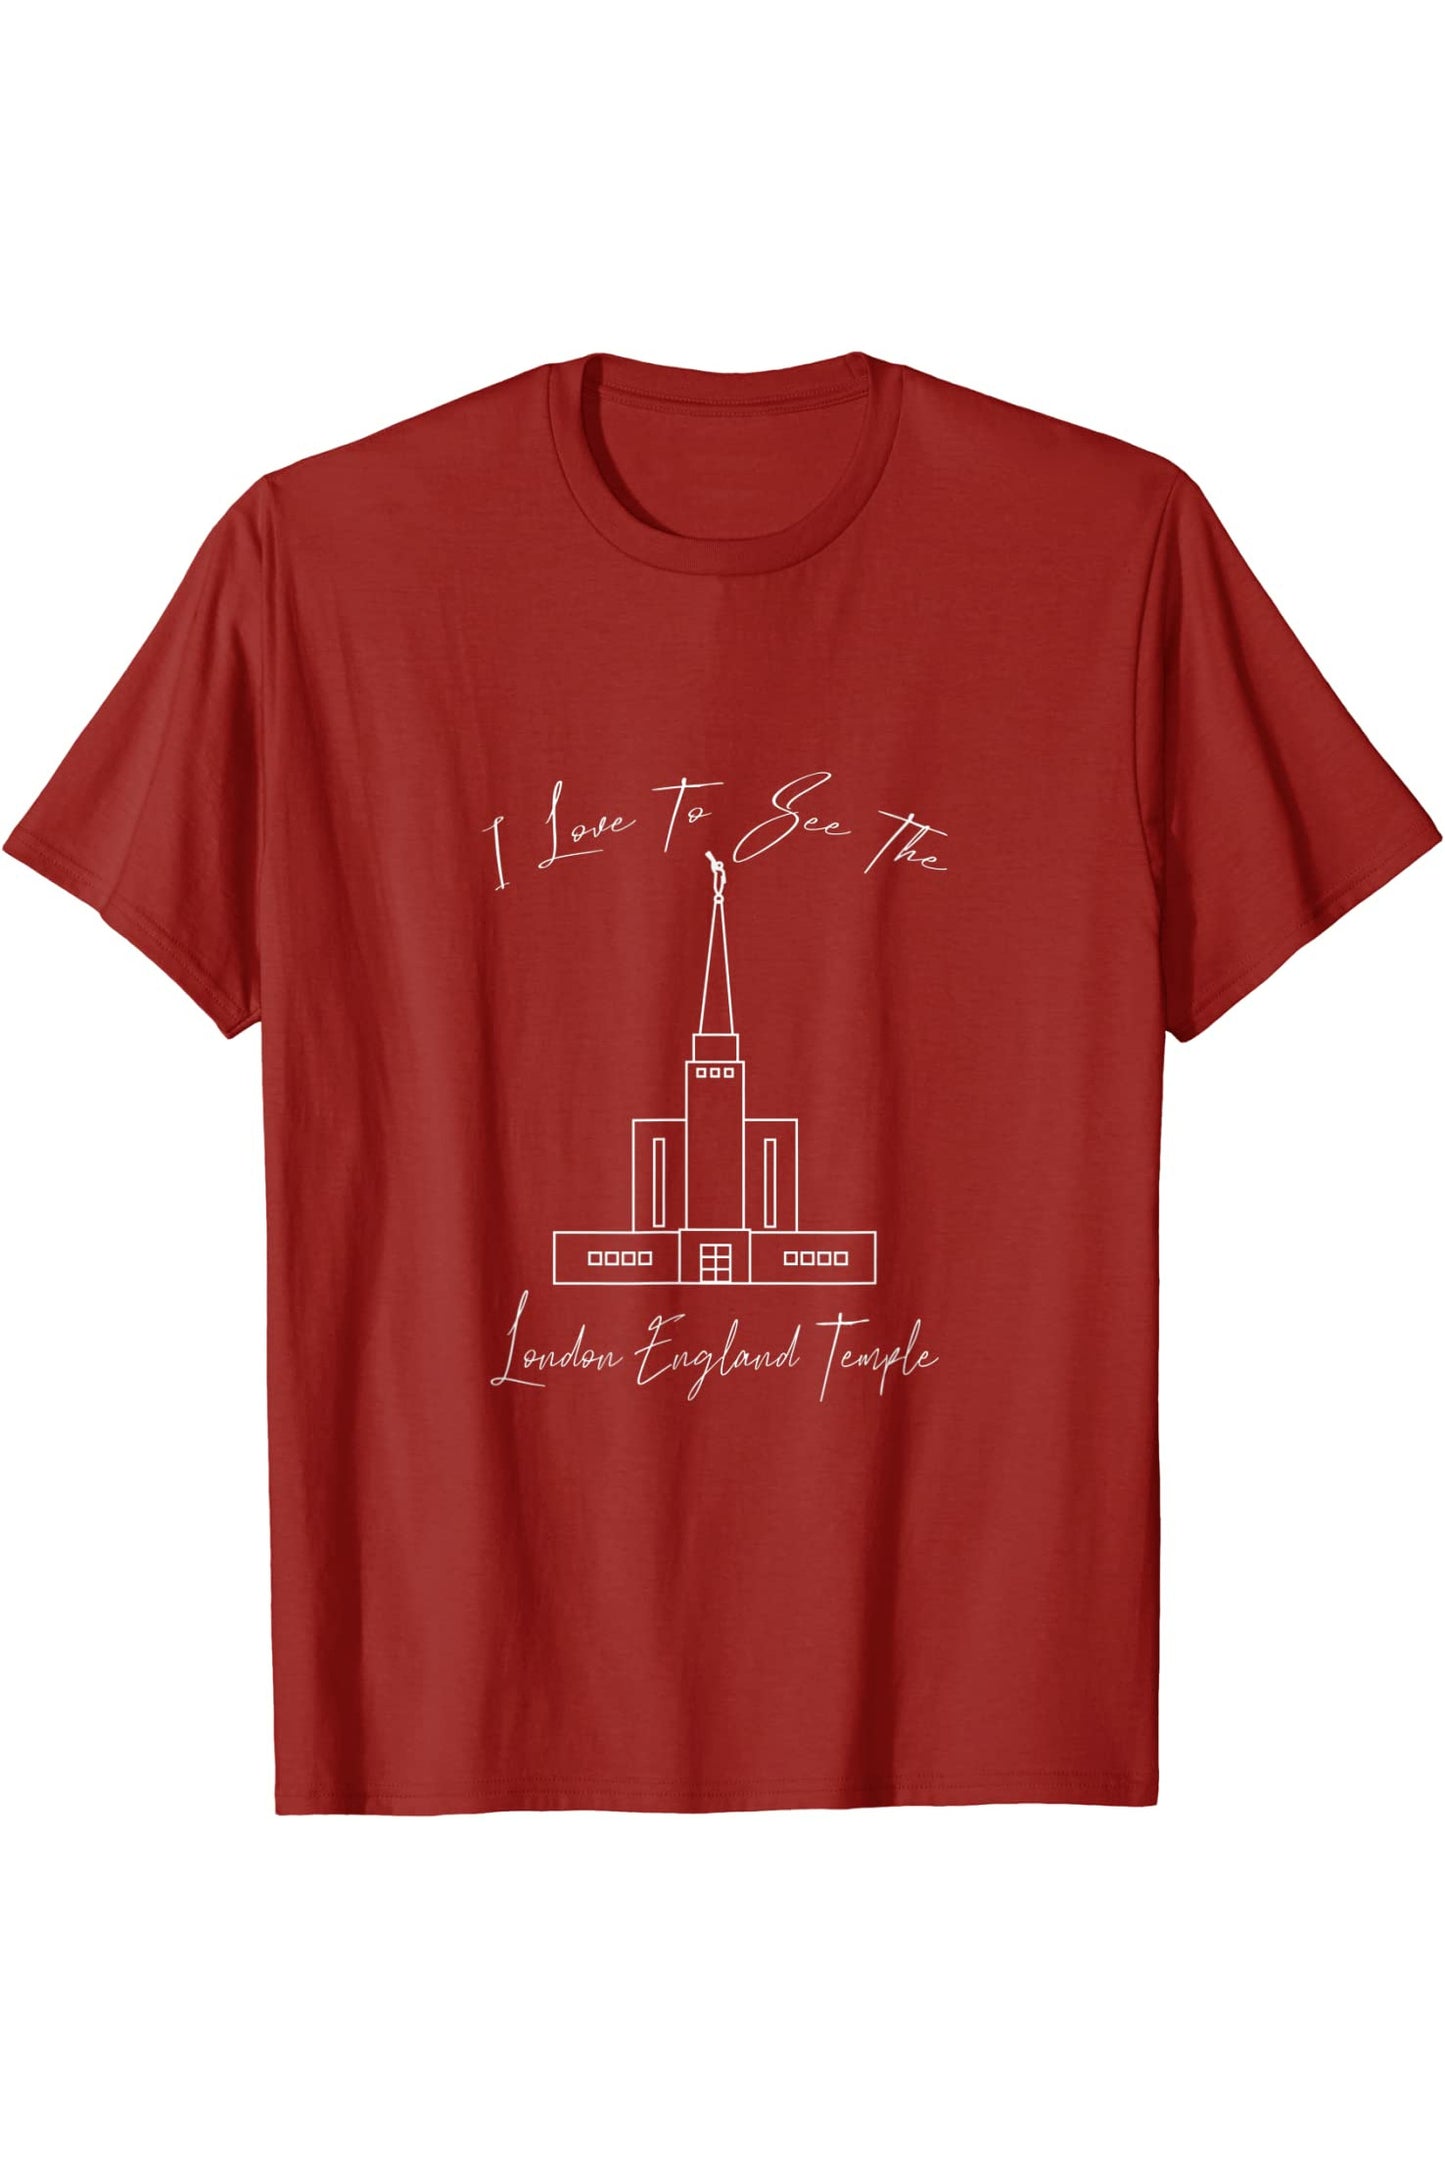 London England Temple T-Shirt - Calligraphy Style (English) US